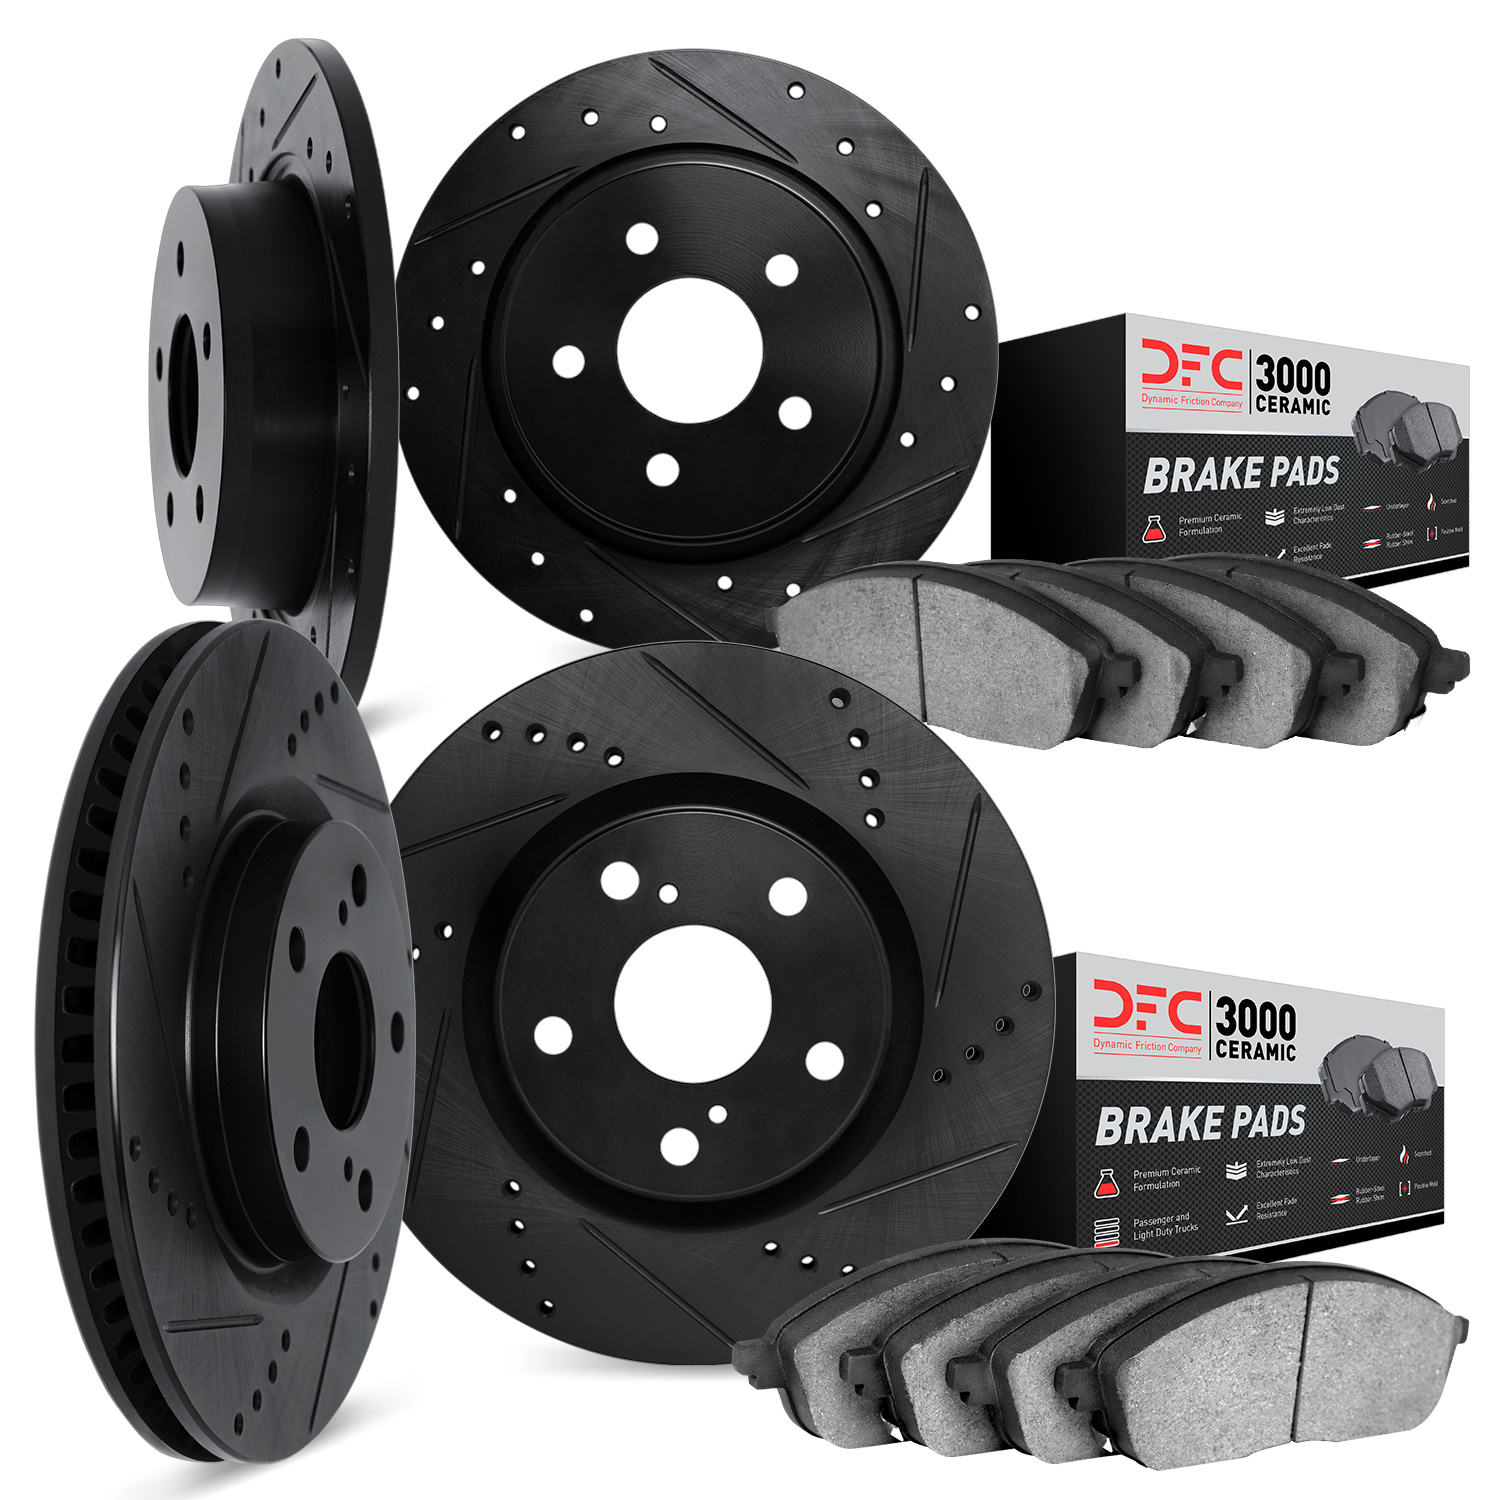 8304-54119 Drilled/Slotted Brake Rotors with 3000-Series Ceramic Brake Pads Kit [Black], 2015-2020 Ford/Lincoln/Mercury/Mazda, P